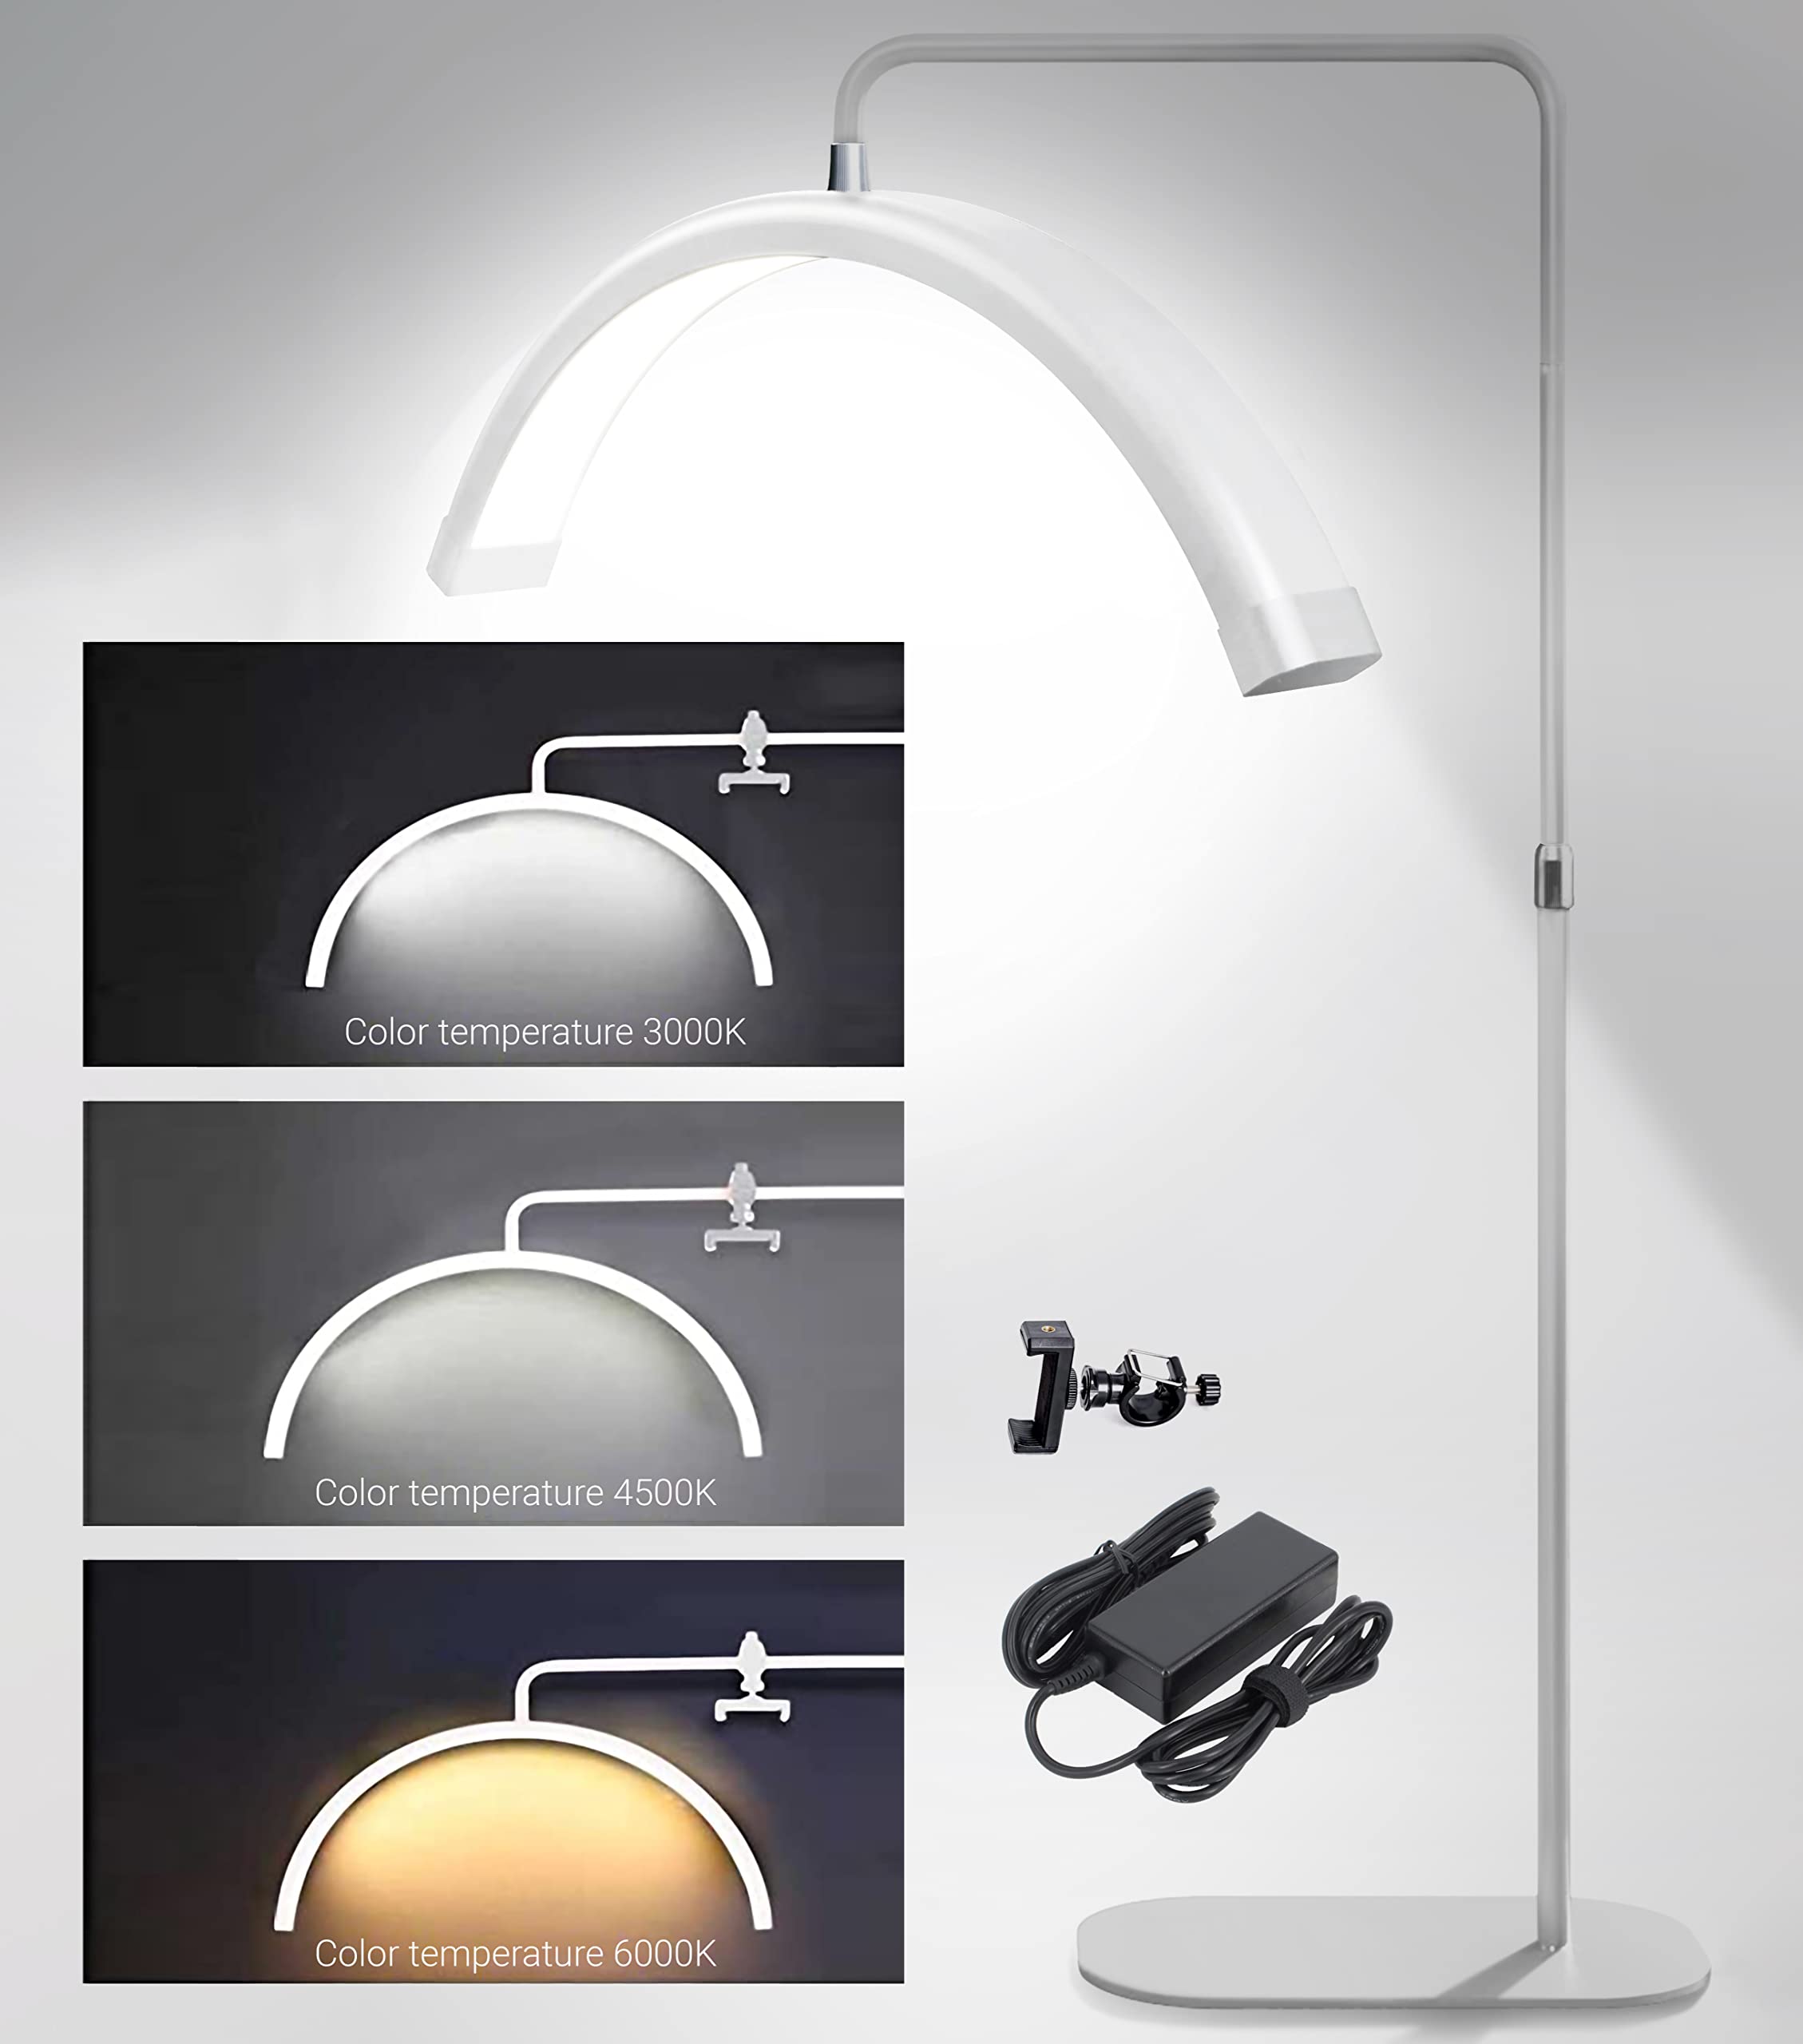 Half Moon Light, Lash Light for Eyelash Extensions,Lash Lamp, Nails Tech  Desk Lamp,3 Colors/Stepless Dimming,Black